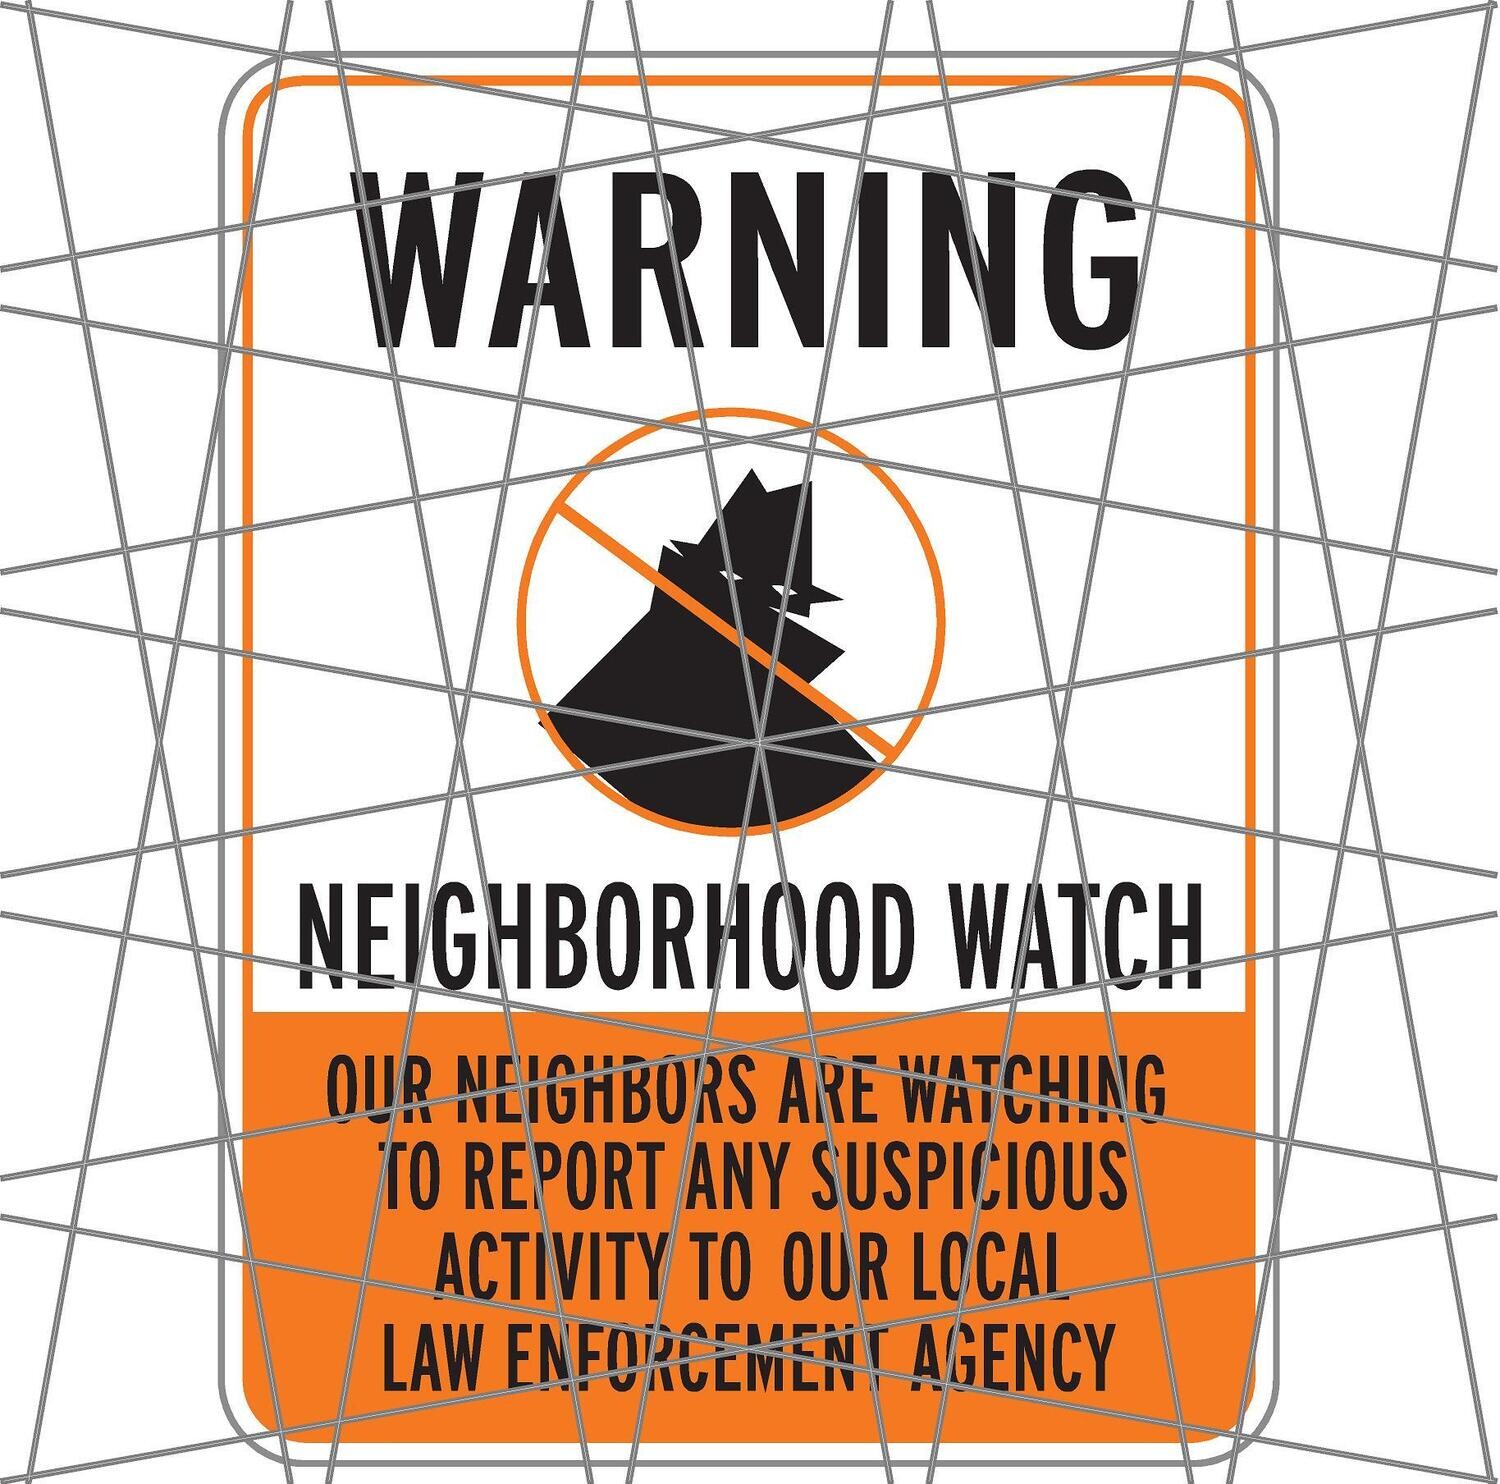 A-33 Warning Neighborhood Watch